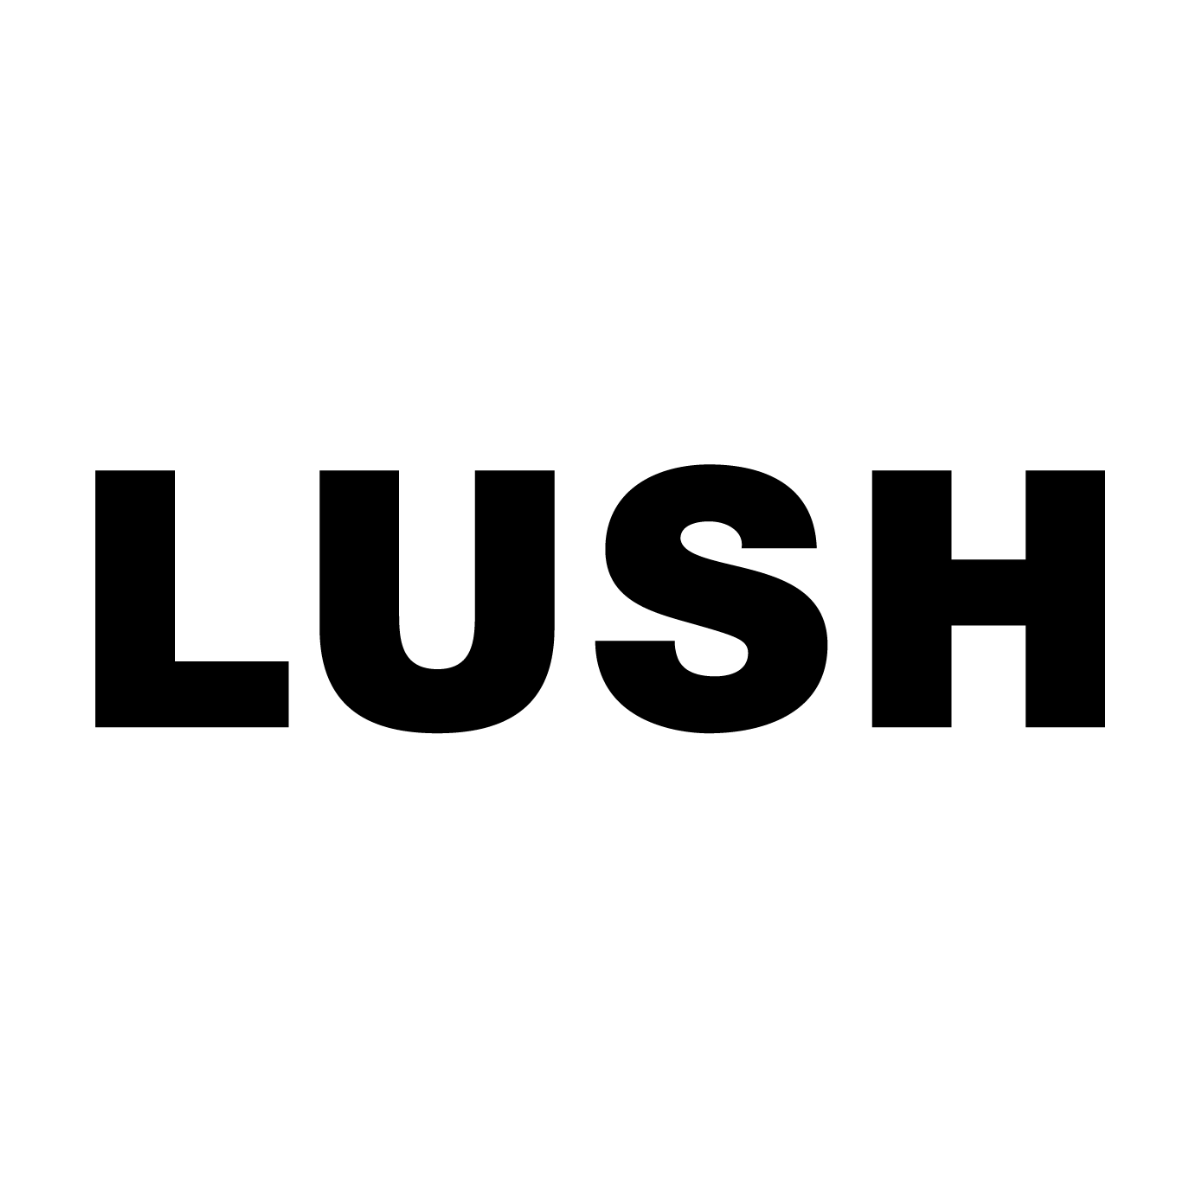 LUSH Cosmetics Green Hills - East Maitland, NSW 2323 - 0426 795 891 | ShowMeLocal.com